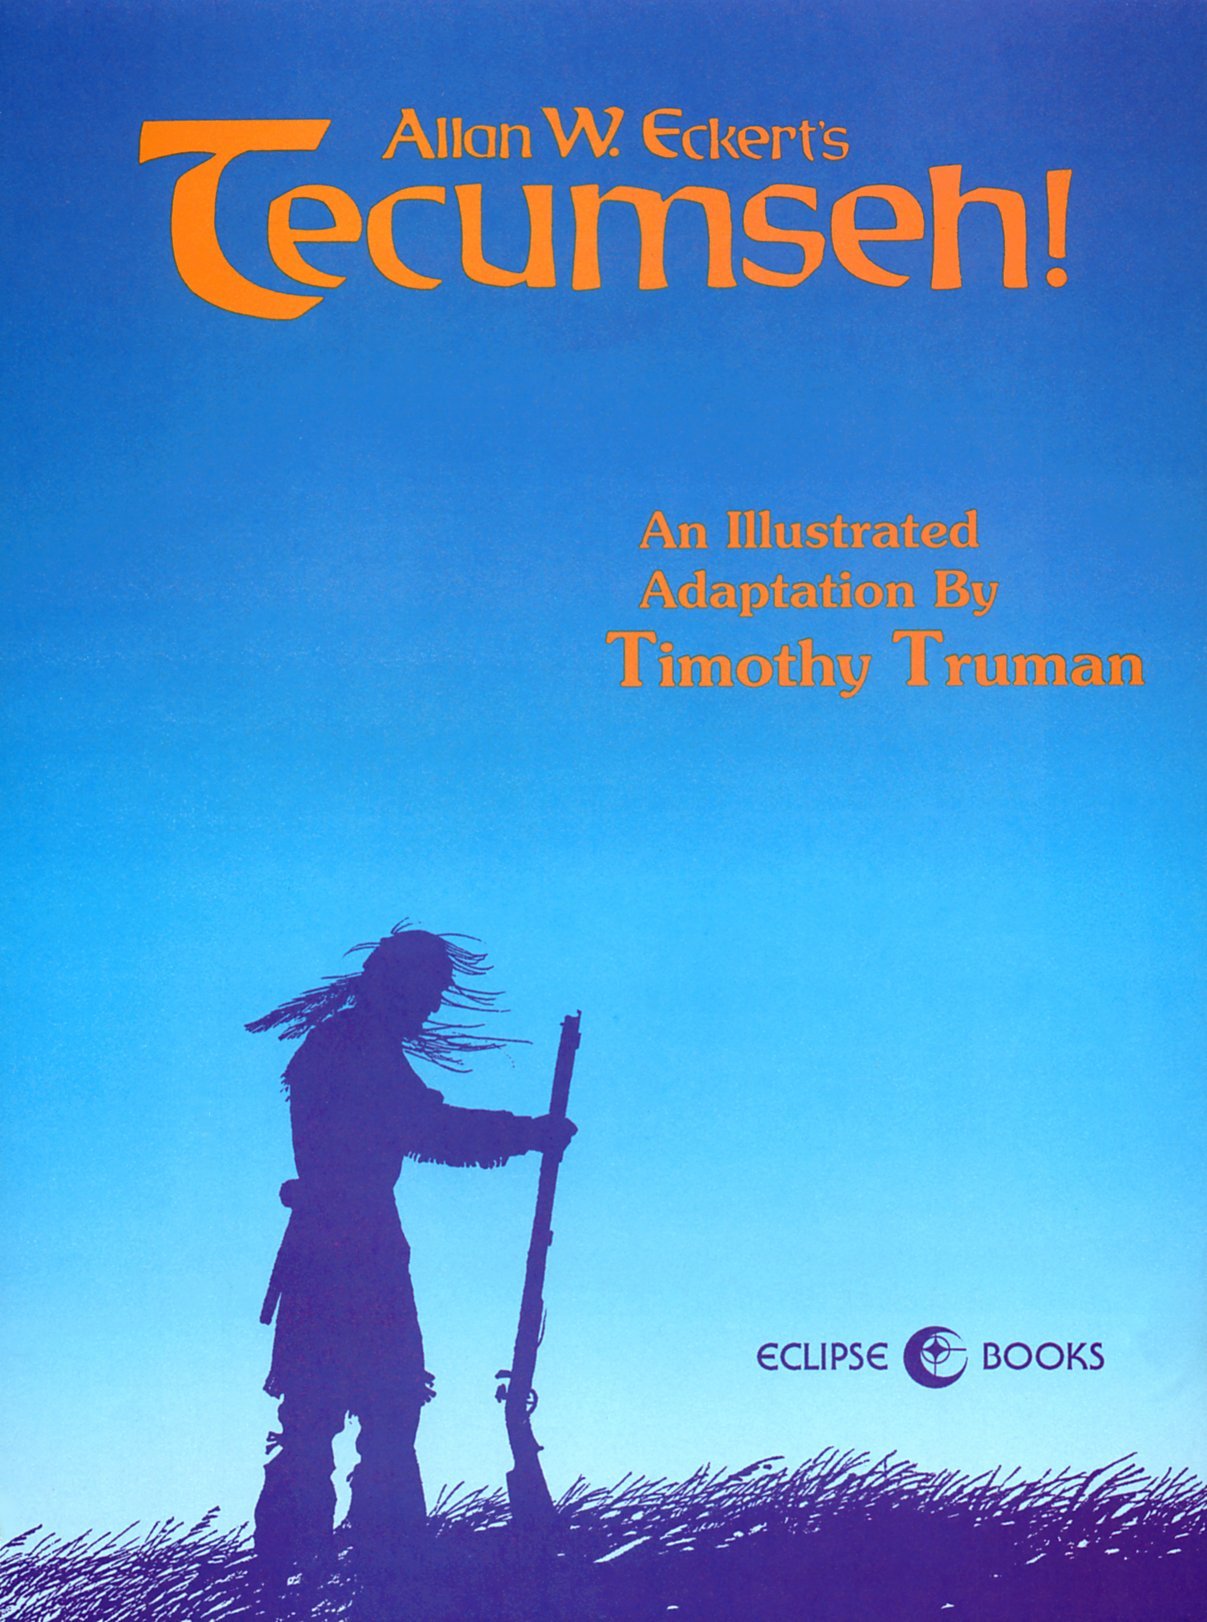 Read online Allen W. Eckert's Tecumseh! comic -  Issue # Full - 2